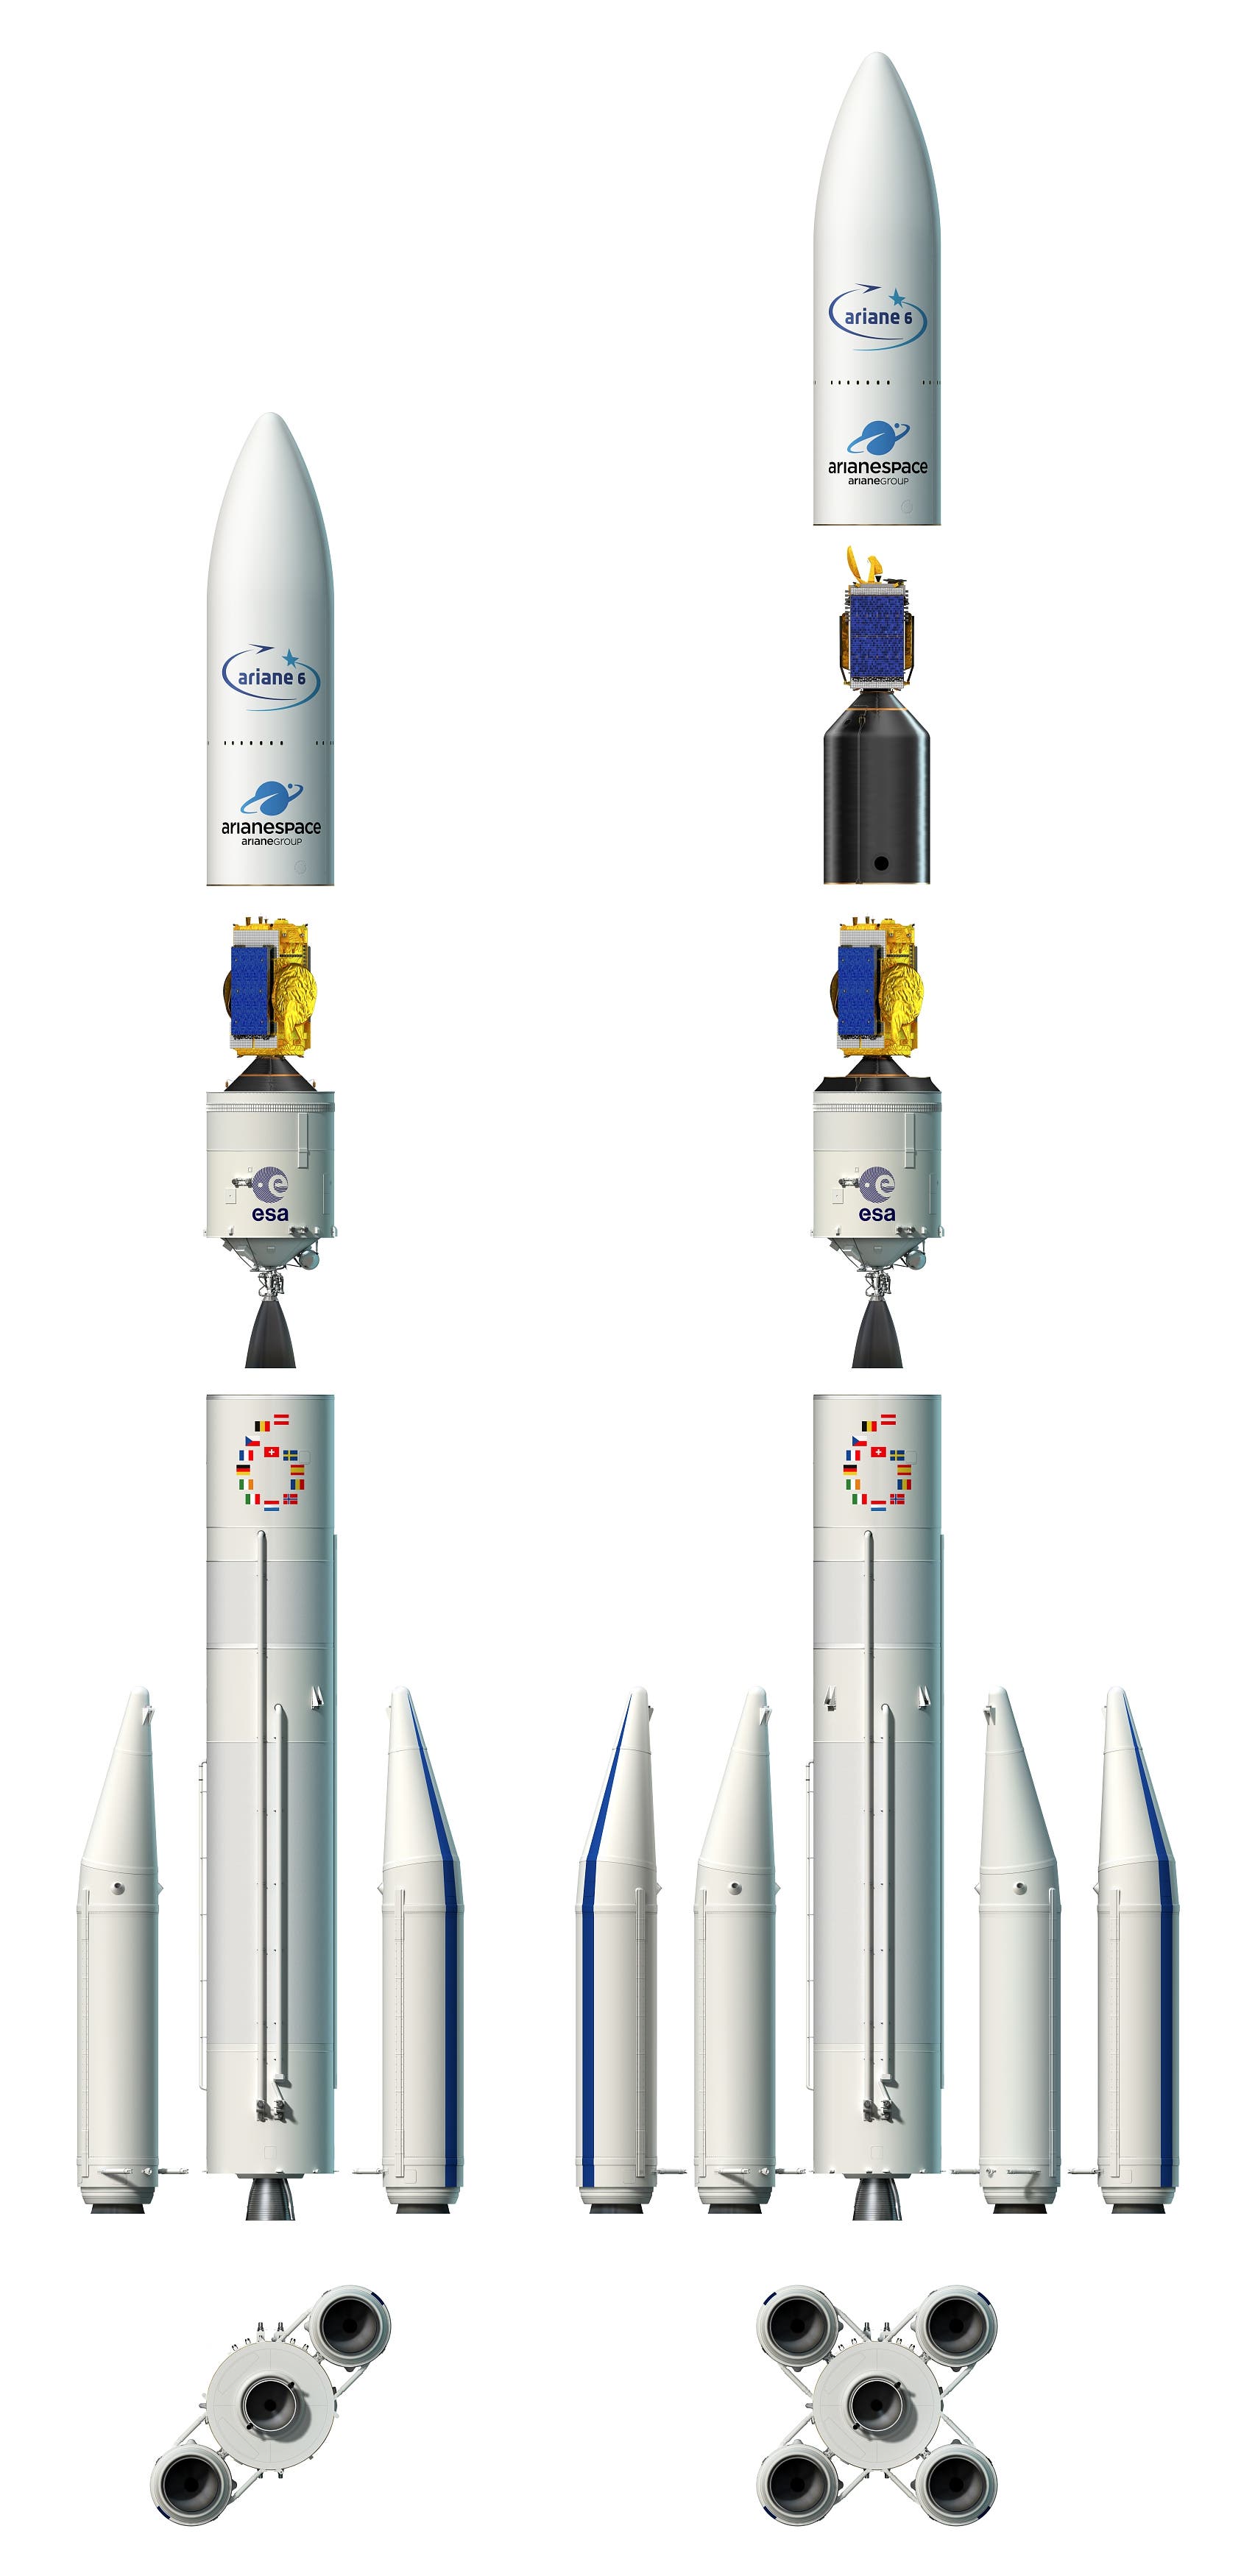 Aufbau der Ariane 6